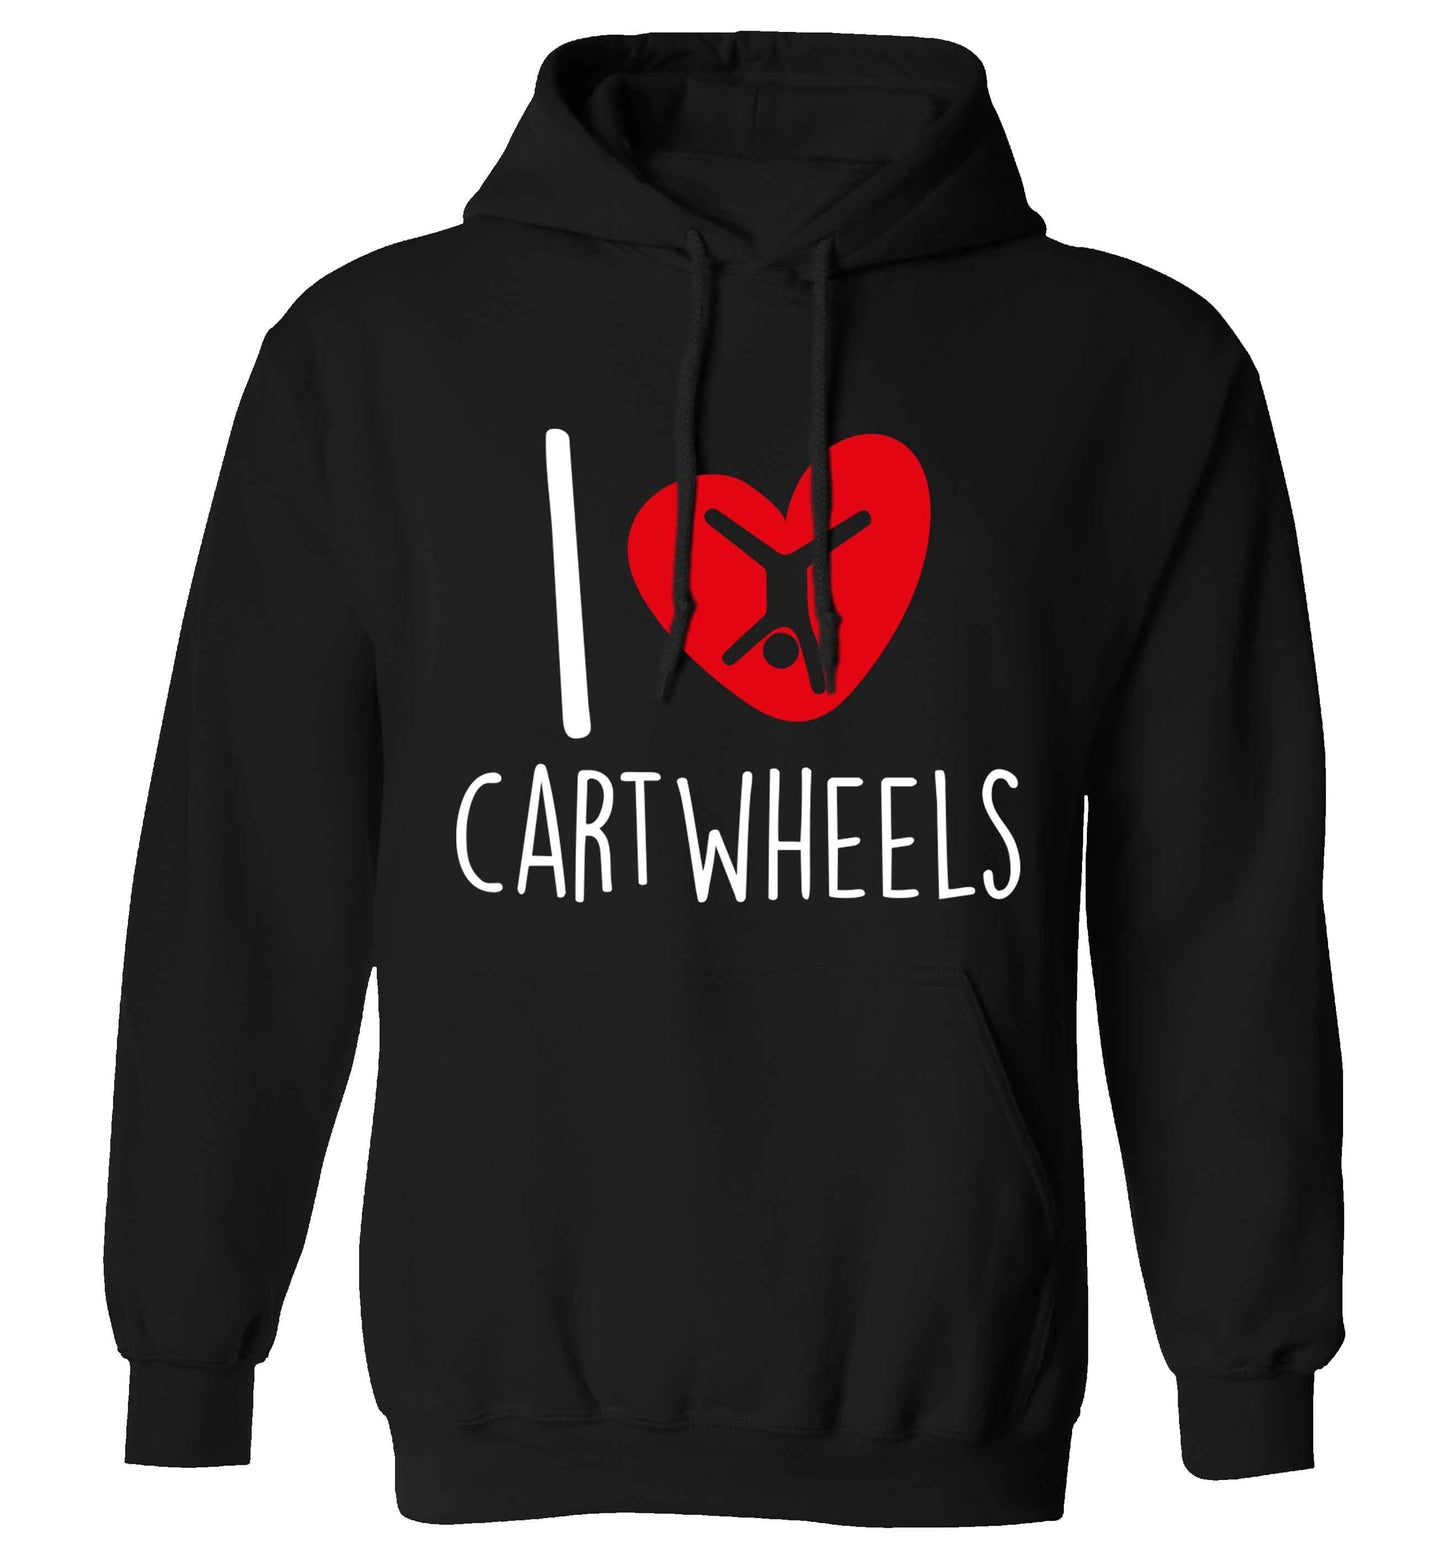 I love cartwheels adults unisex black hoodie 2XL